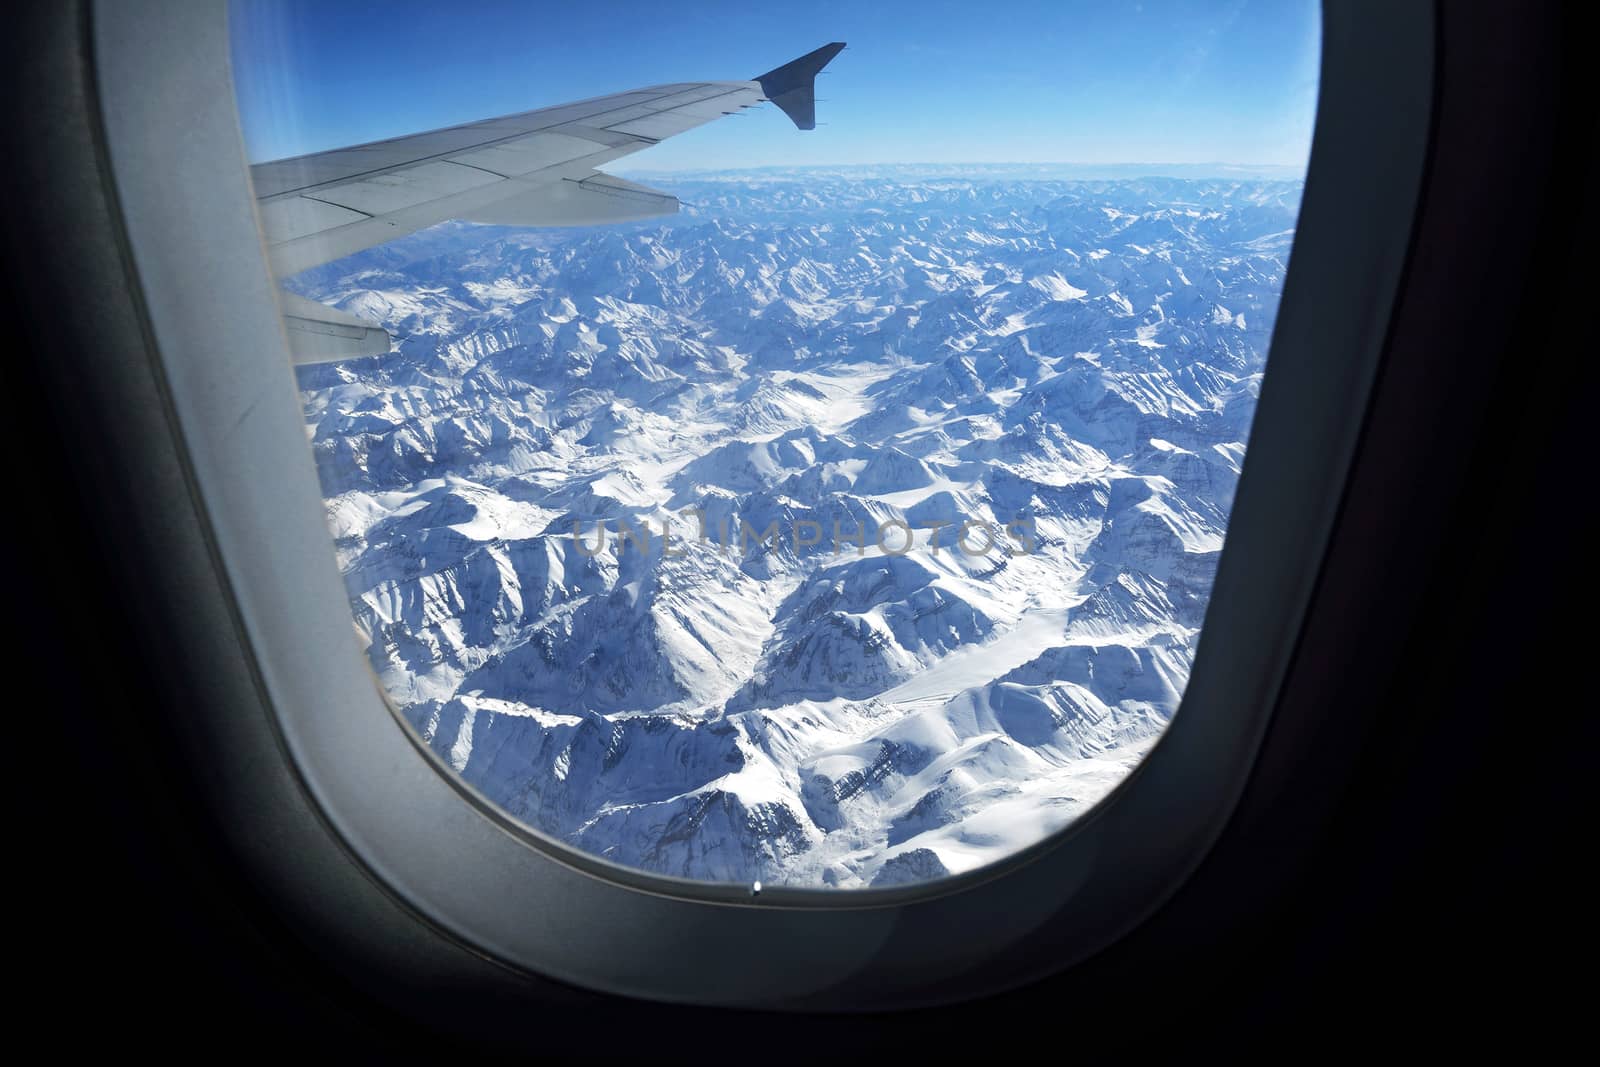 Mountain range view from aircraft window, Leh, Ladakh, India